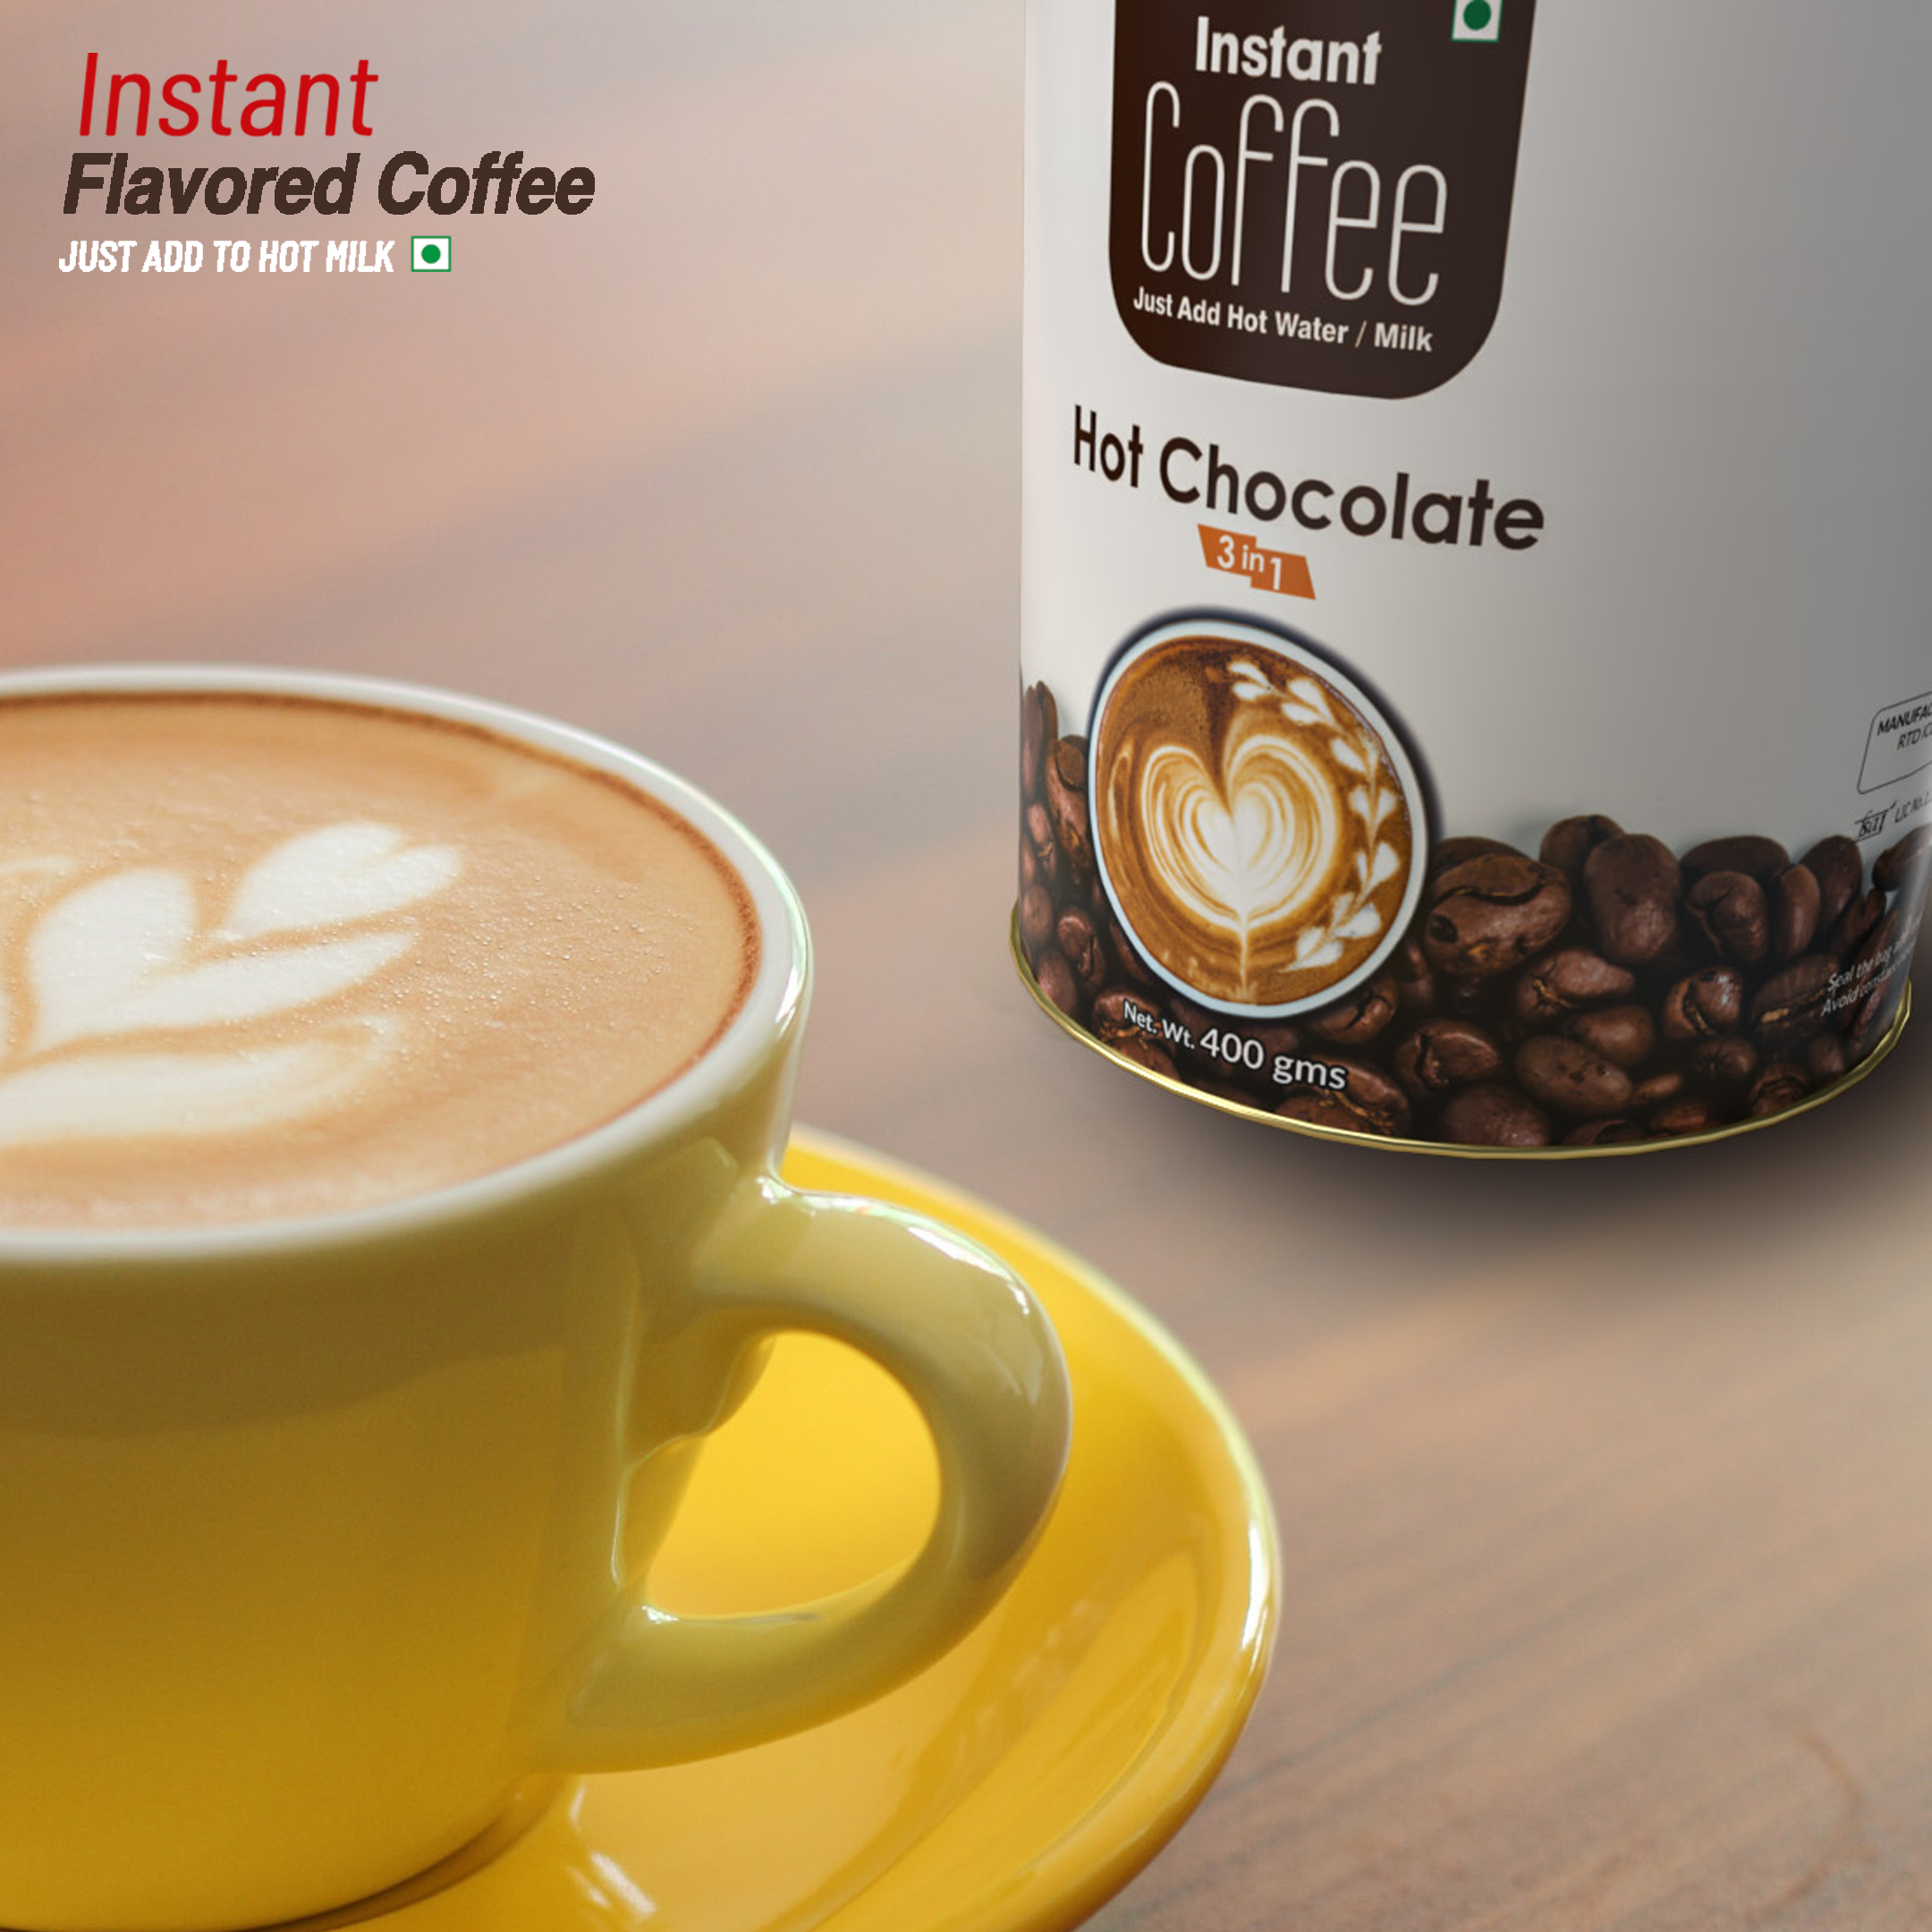 Black Currant Instant Coffee Premix (3 in 1) - 400 gms